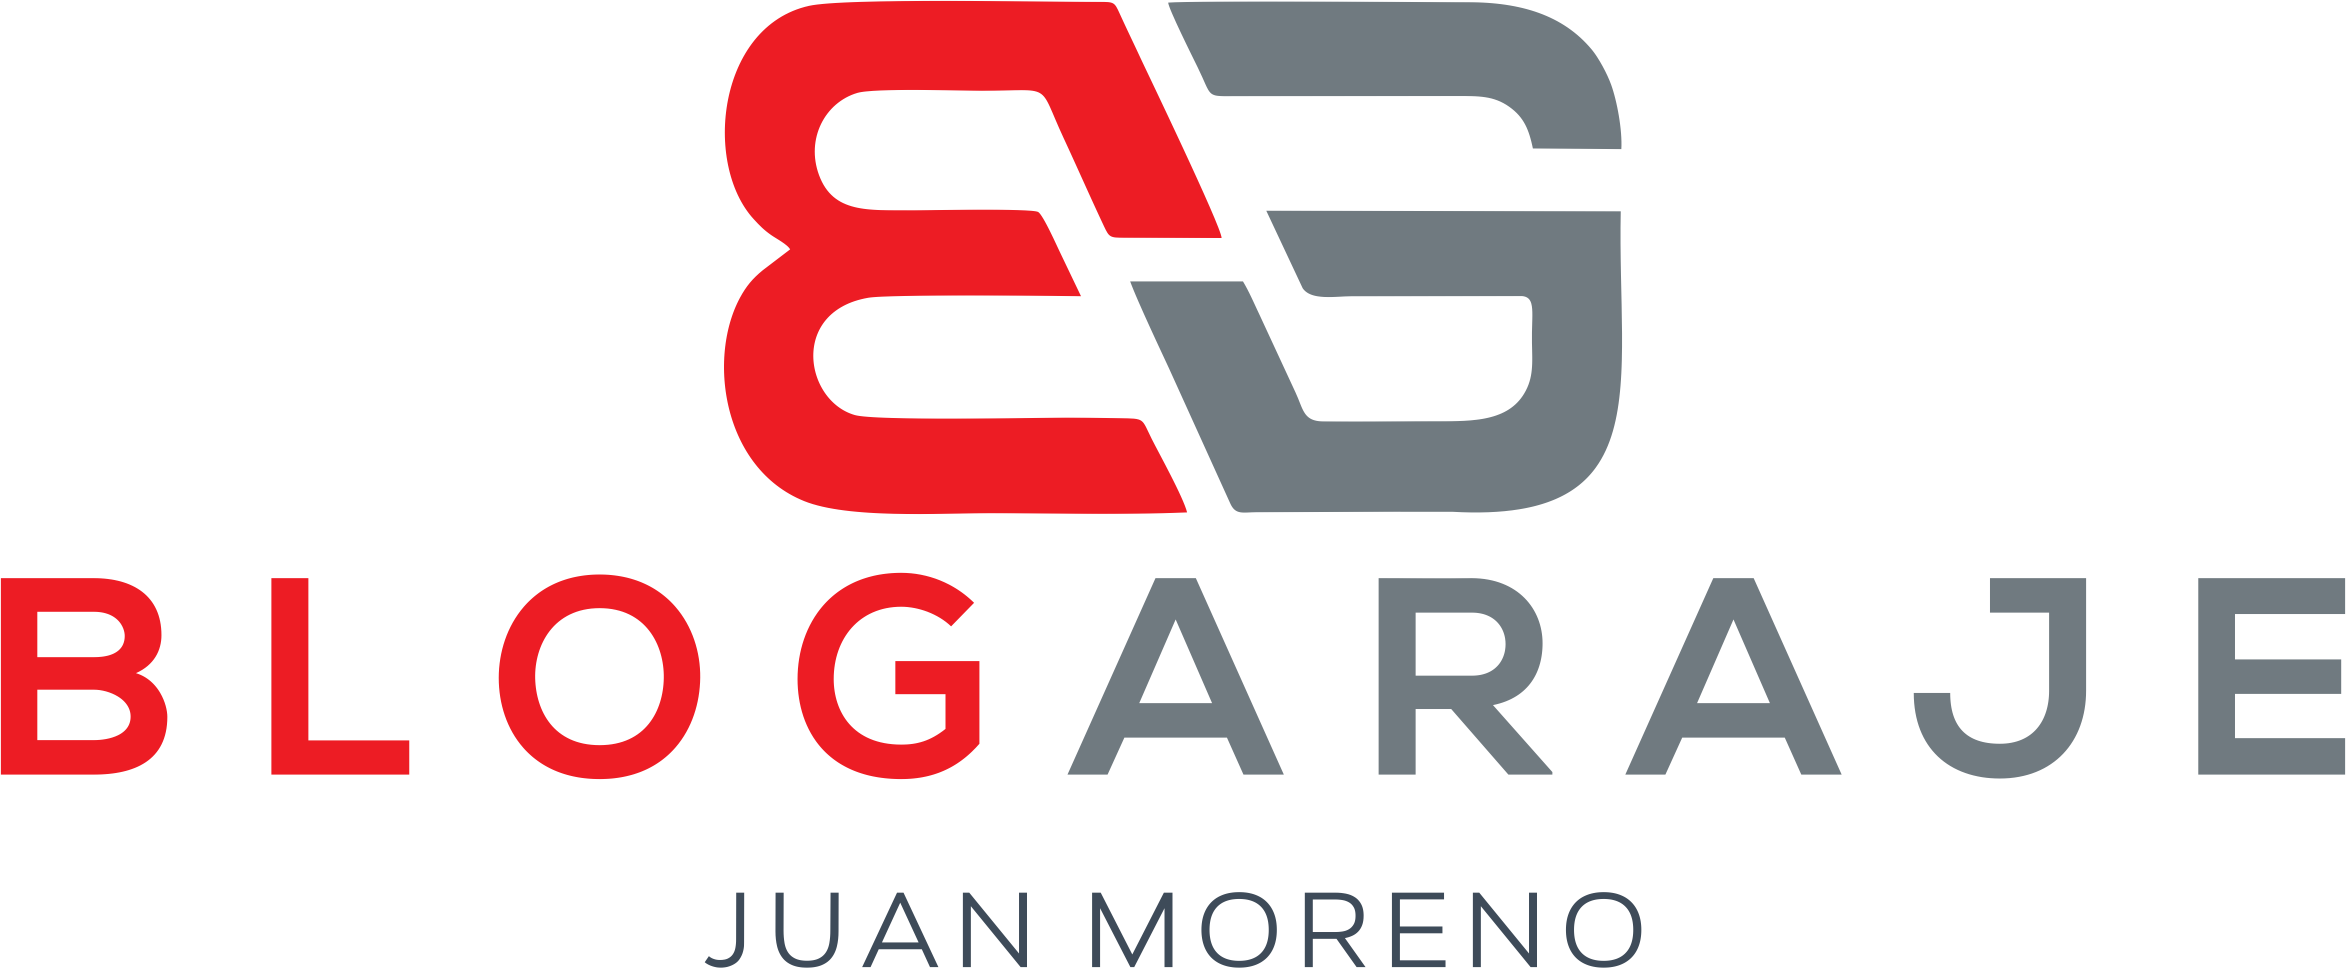 Blogaraje Juan Moreno